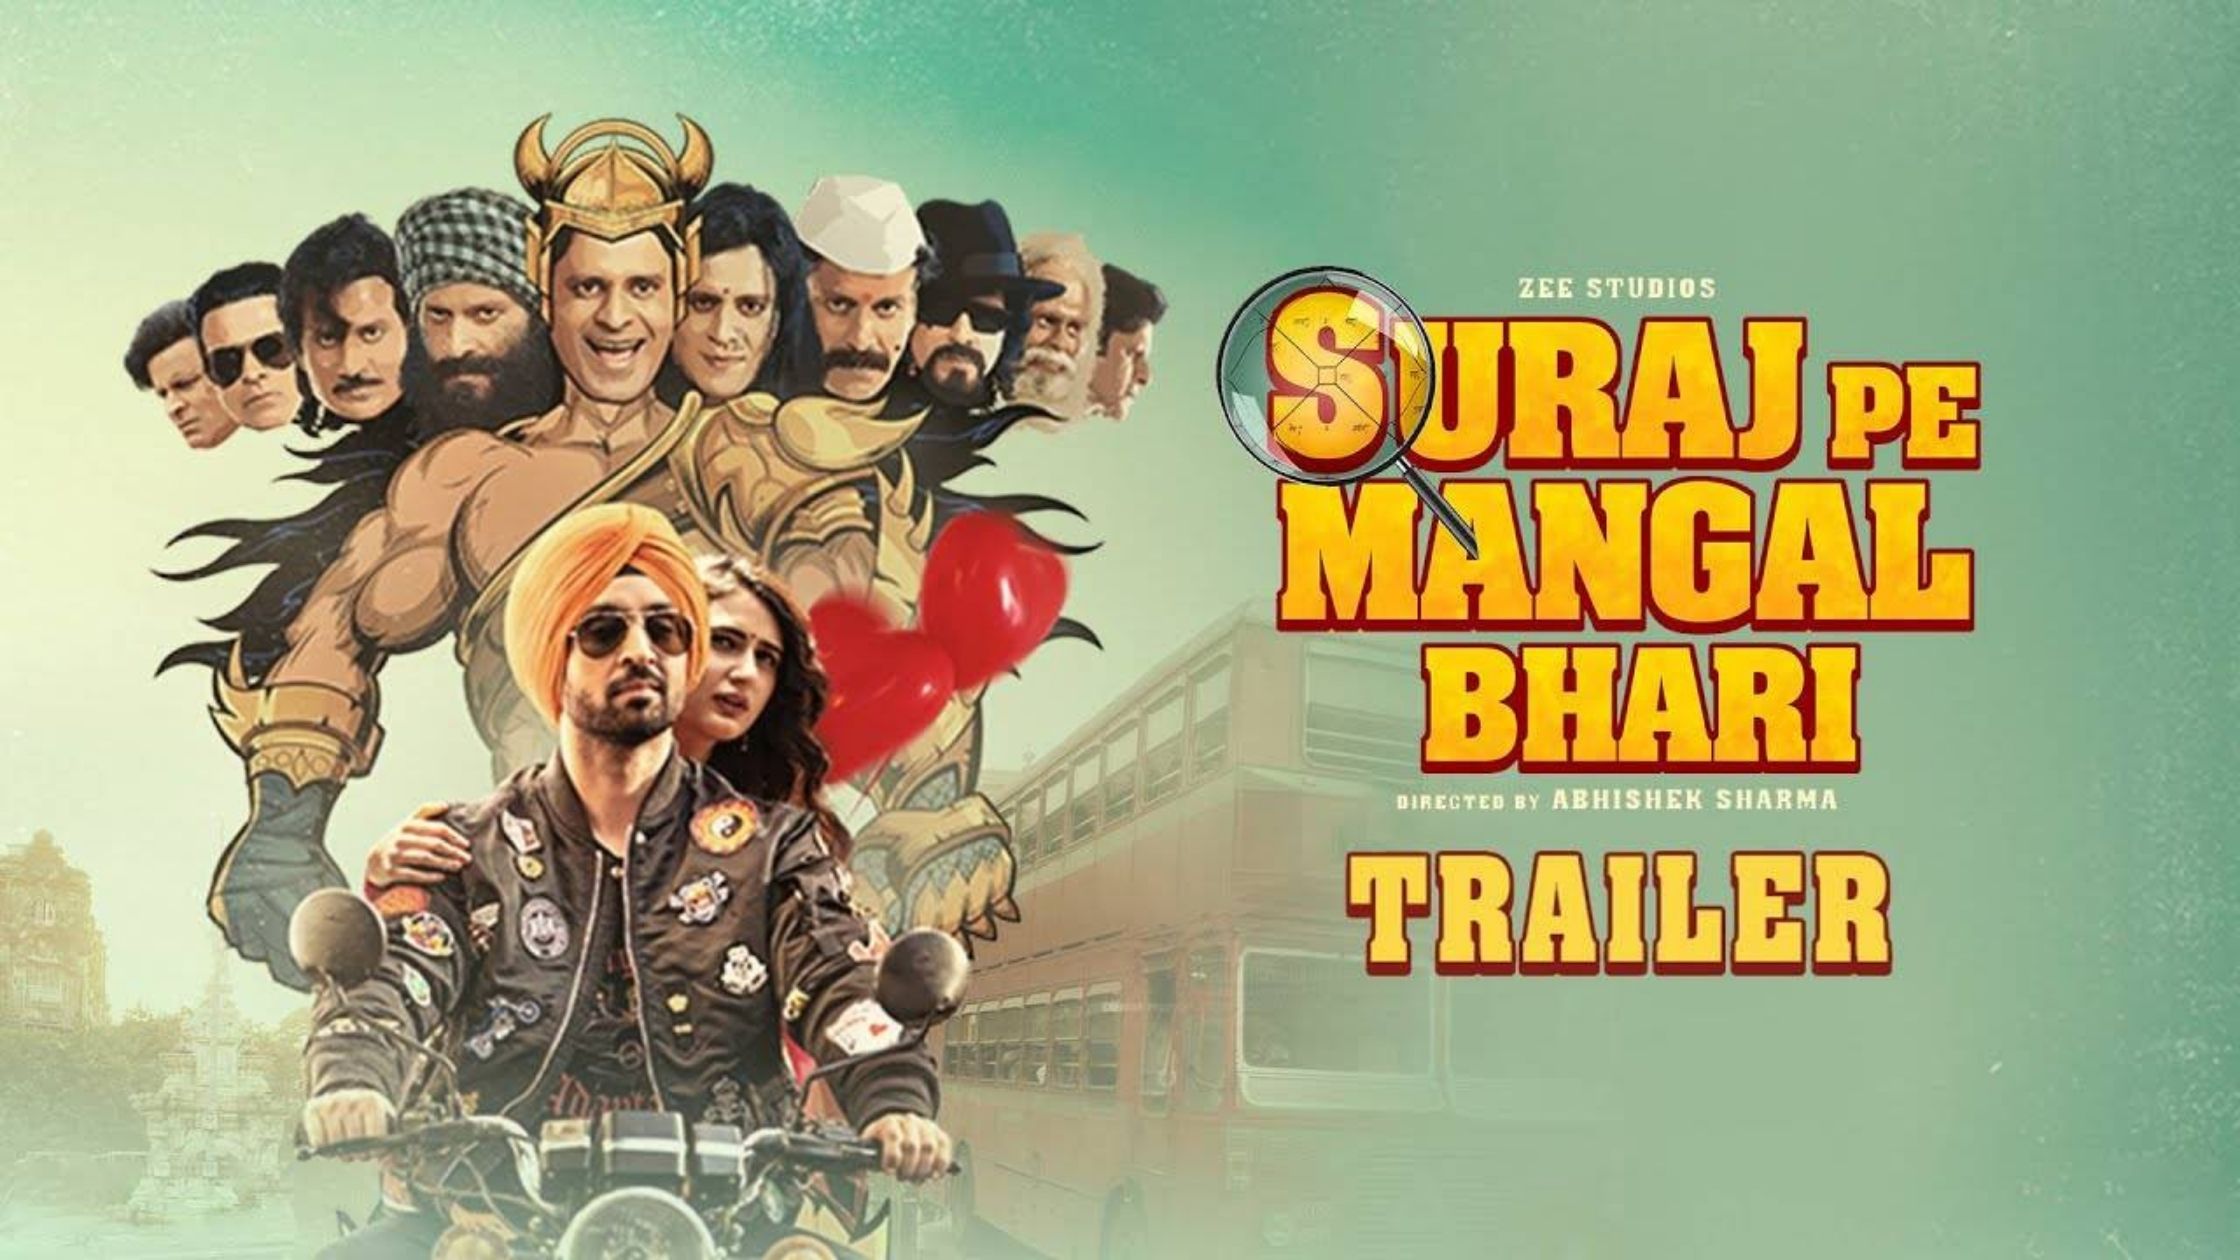 Suraj pe mangal bhari trailer